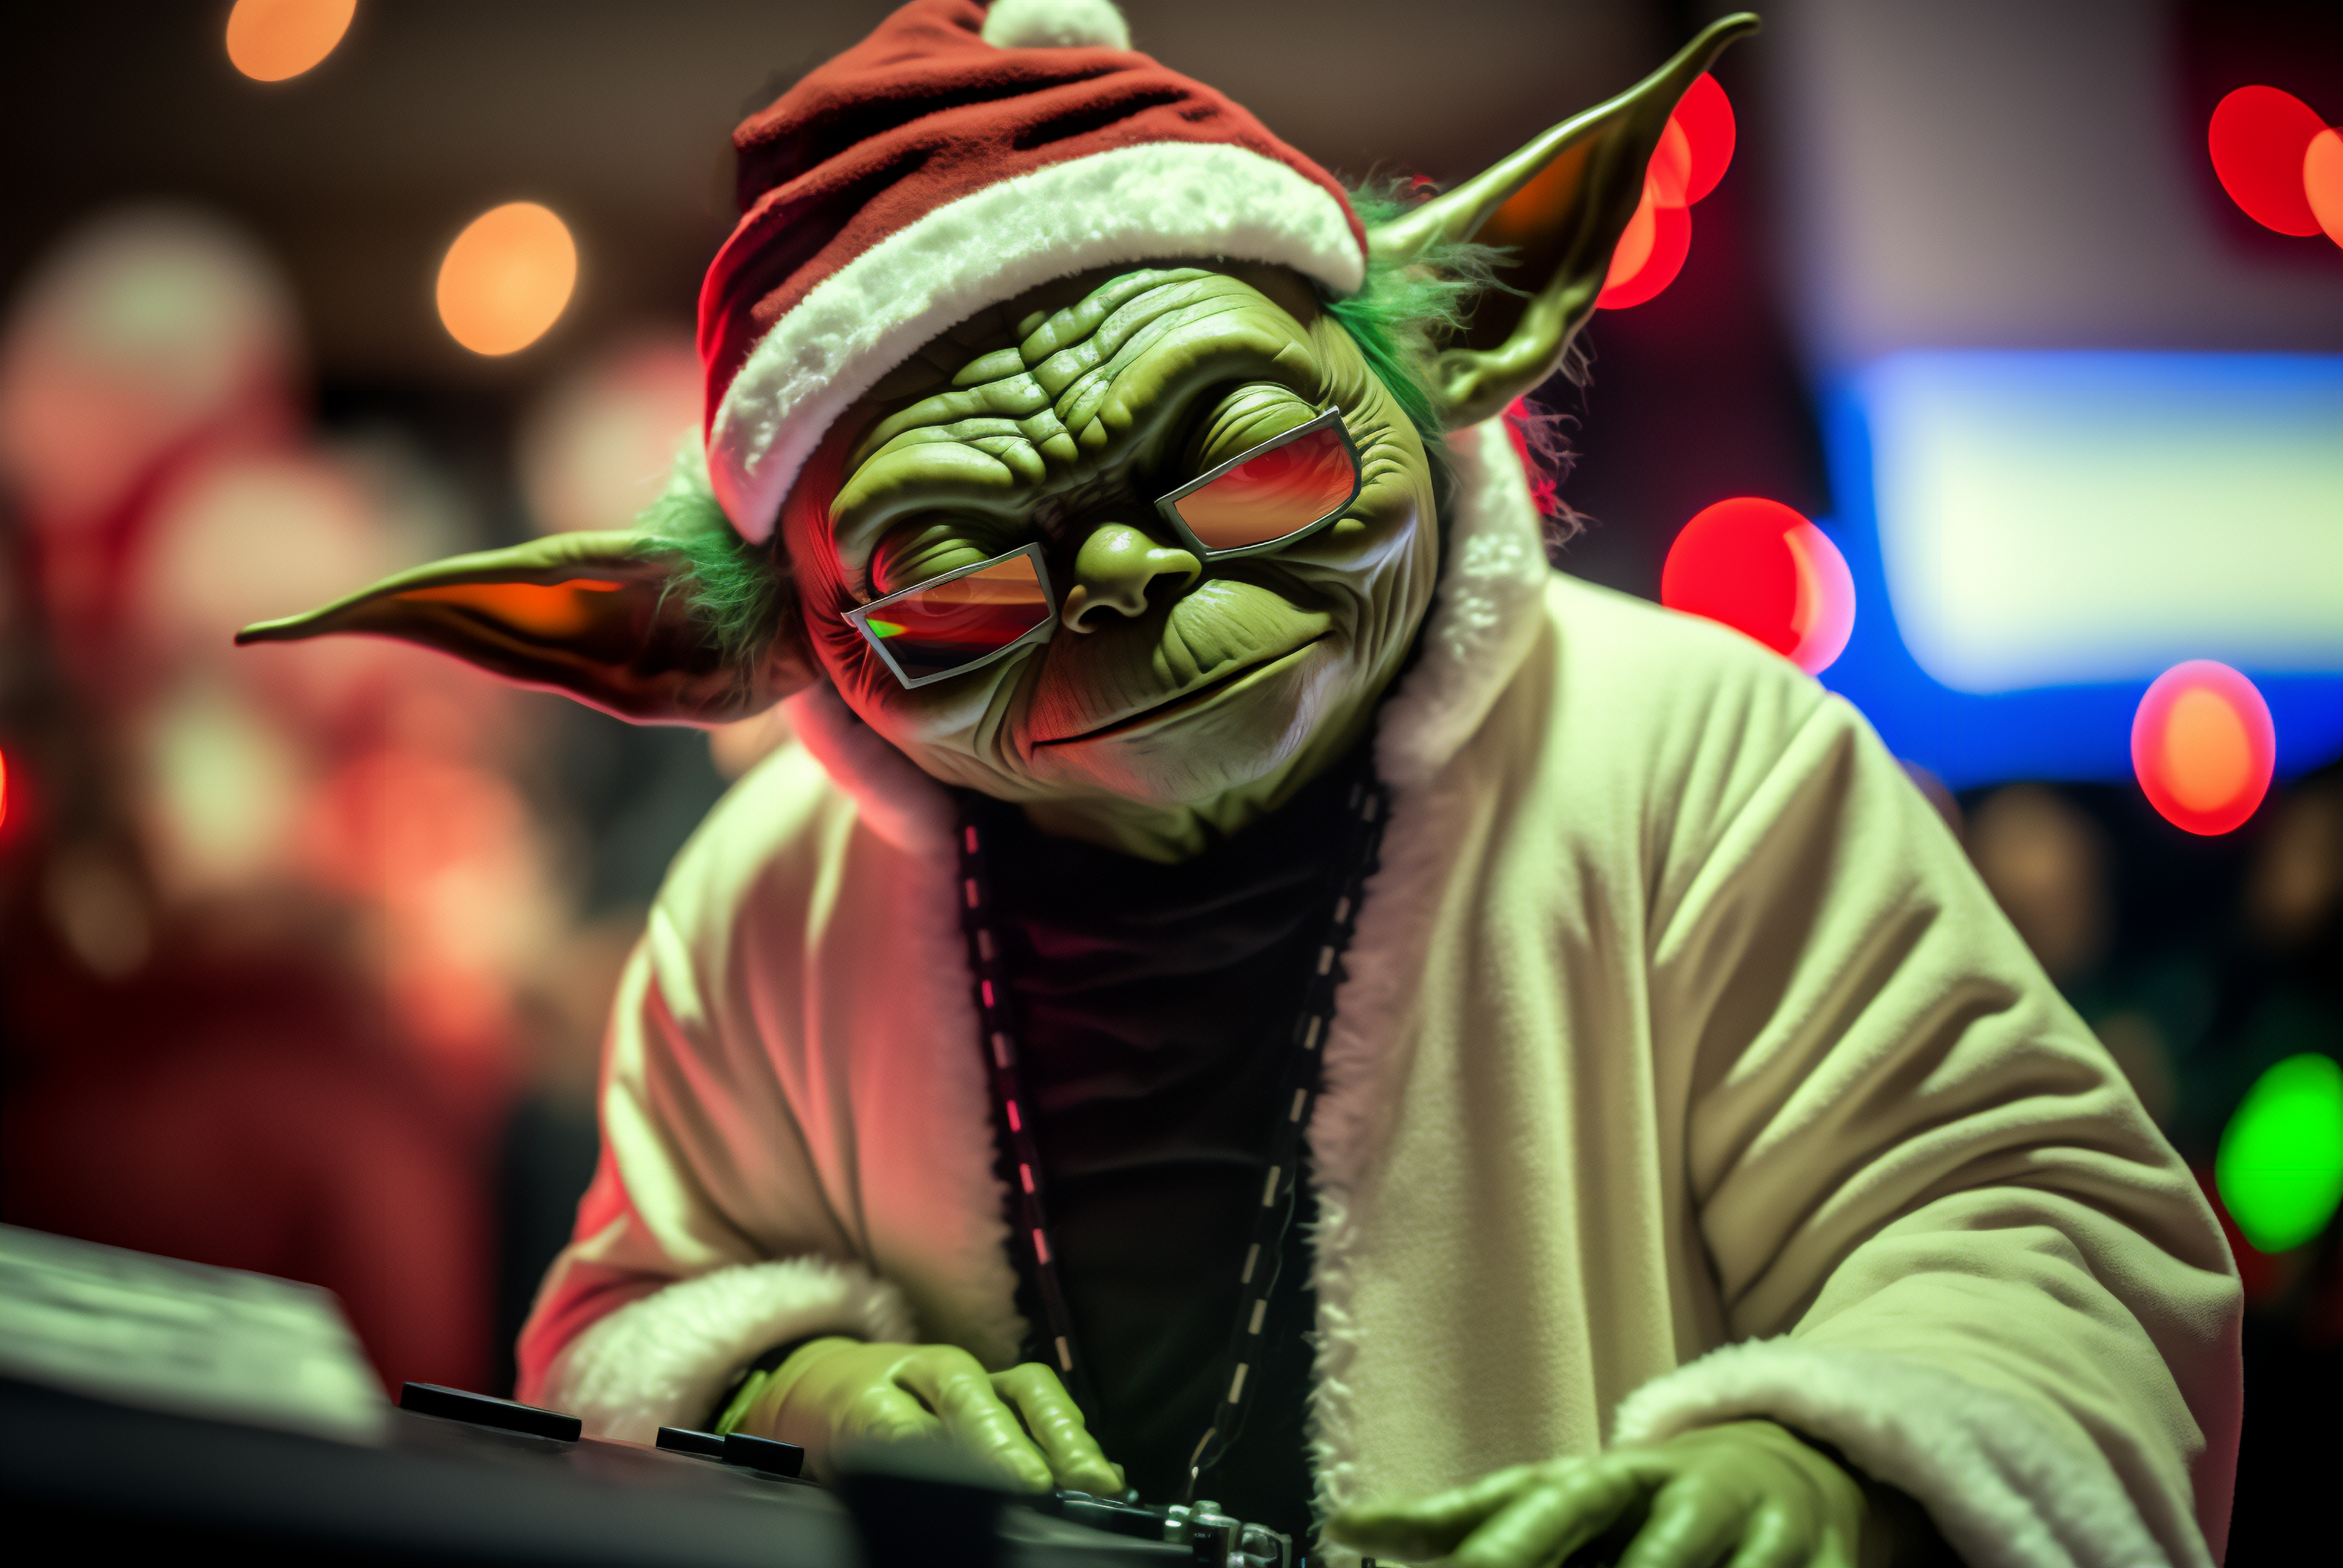 Ai Art Disc Jockey Party Room Bokeh Yoda Star Wars Christmas Santa Hats Lights 3060x2048